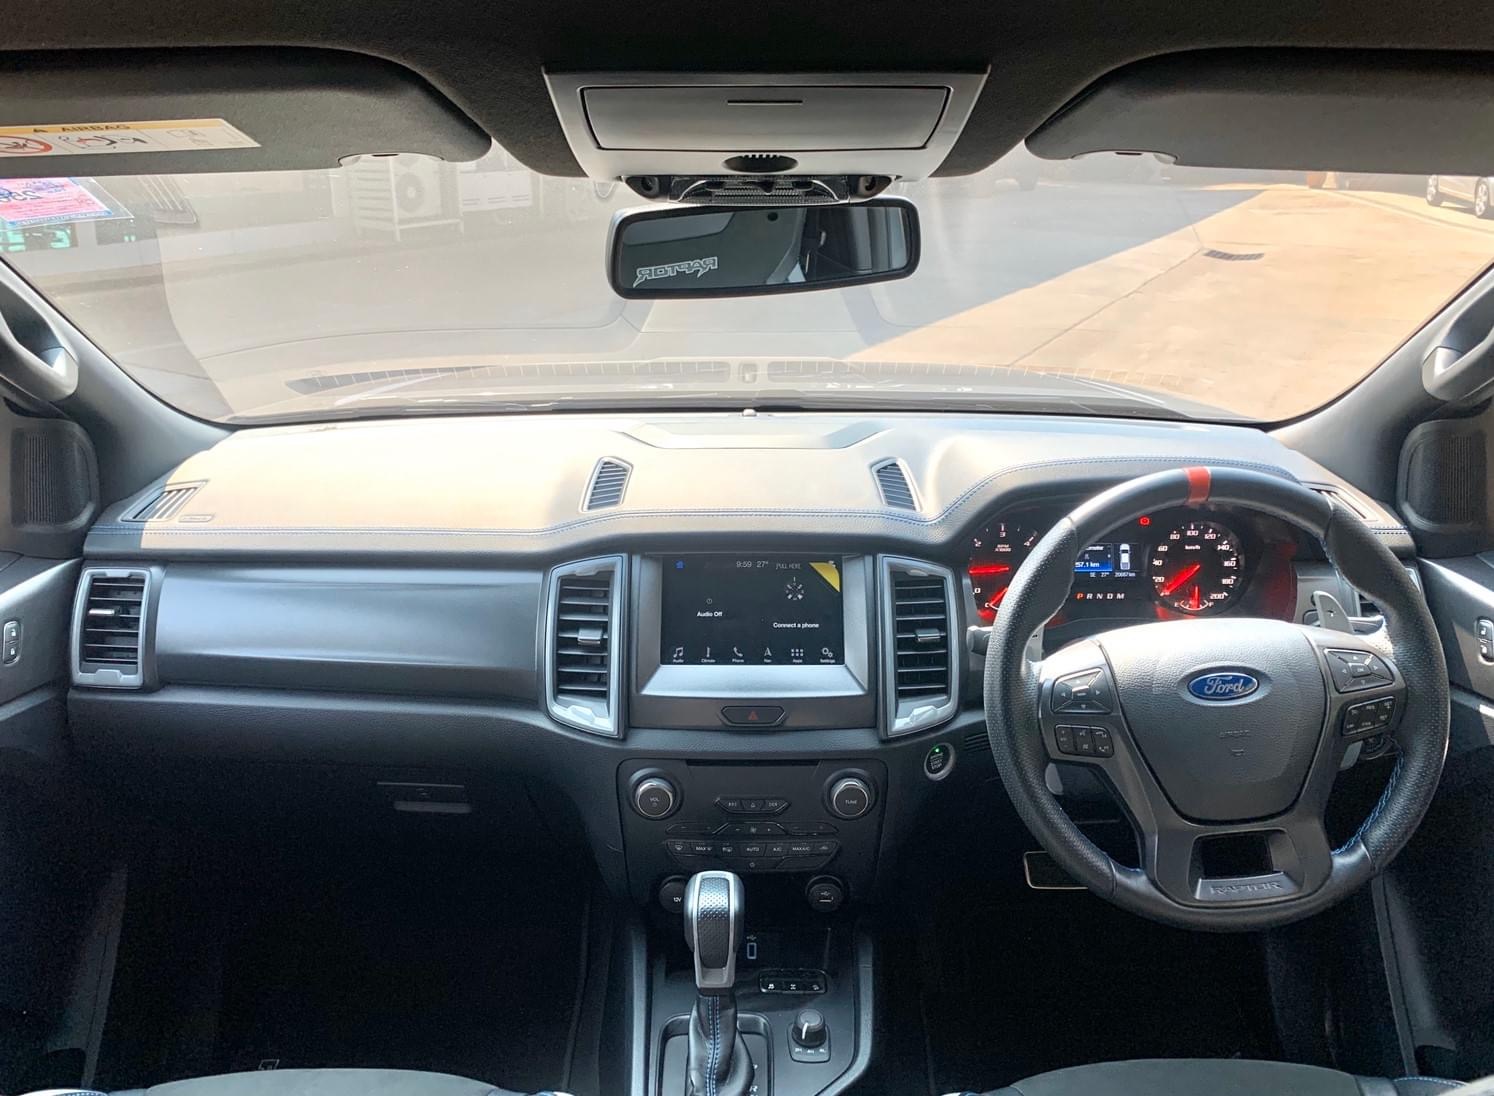 Ford Ranger Hi-Rider (Cab) ปี 2018 สีเทา